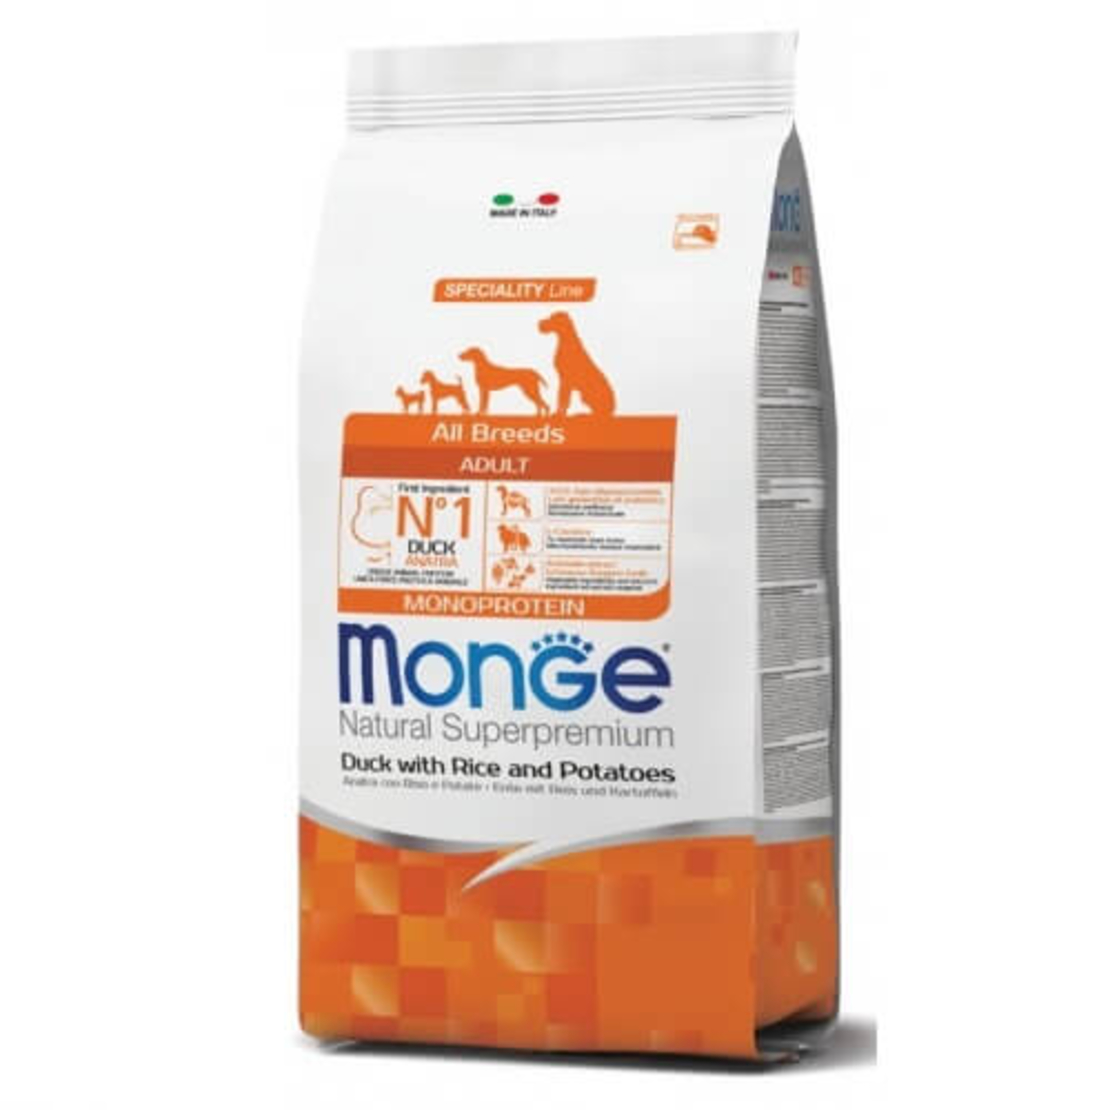 MONGE MONOPROTEIN מונג' מונופרוטאין לכלב בוגר על בסיס ברווז, אורז ותפוחי אדמה 12 ק